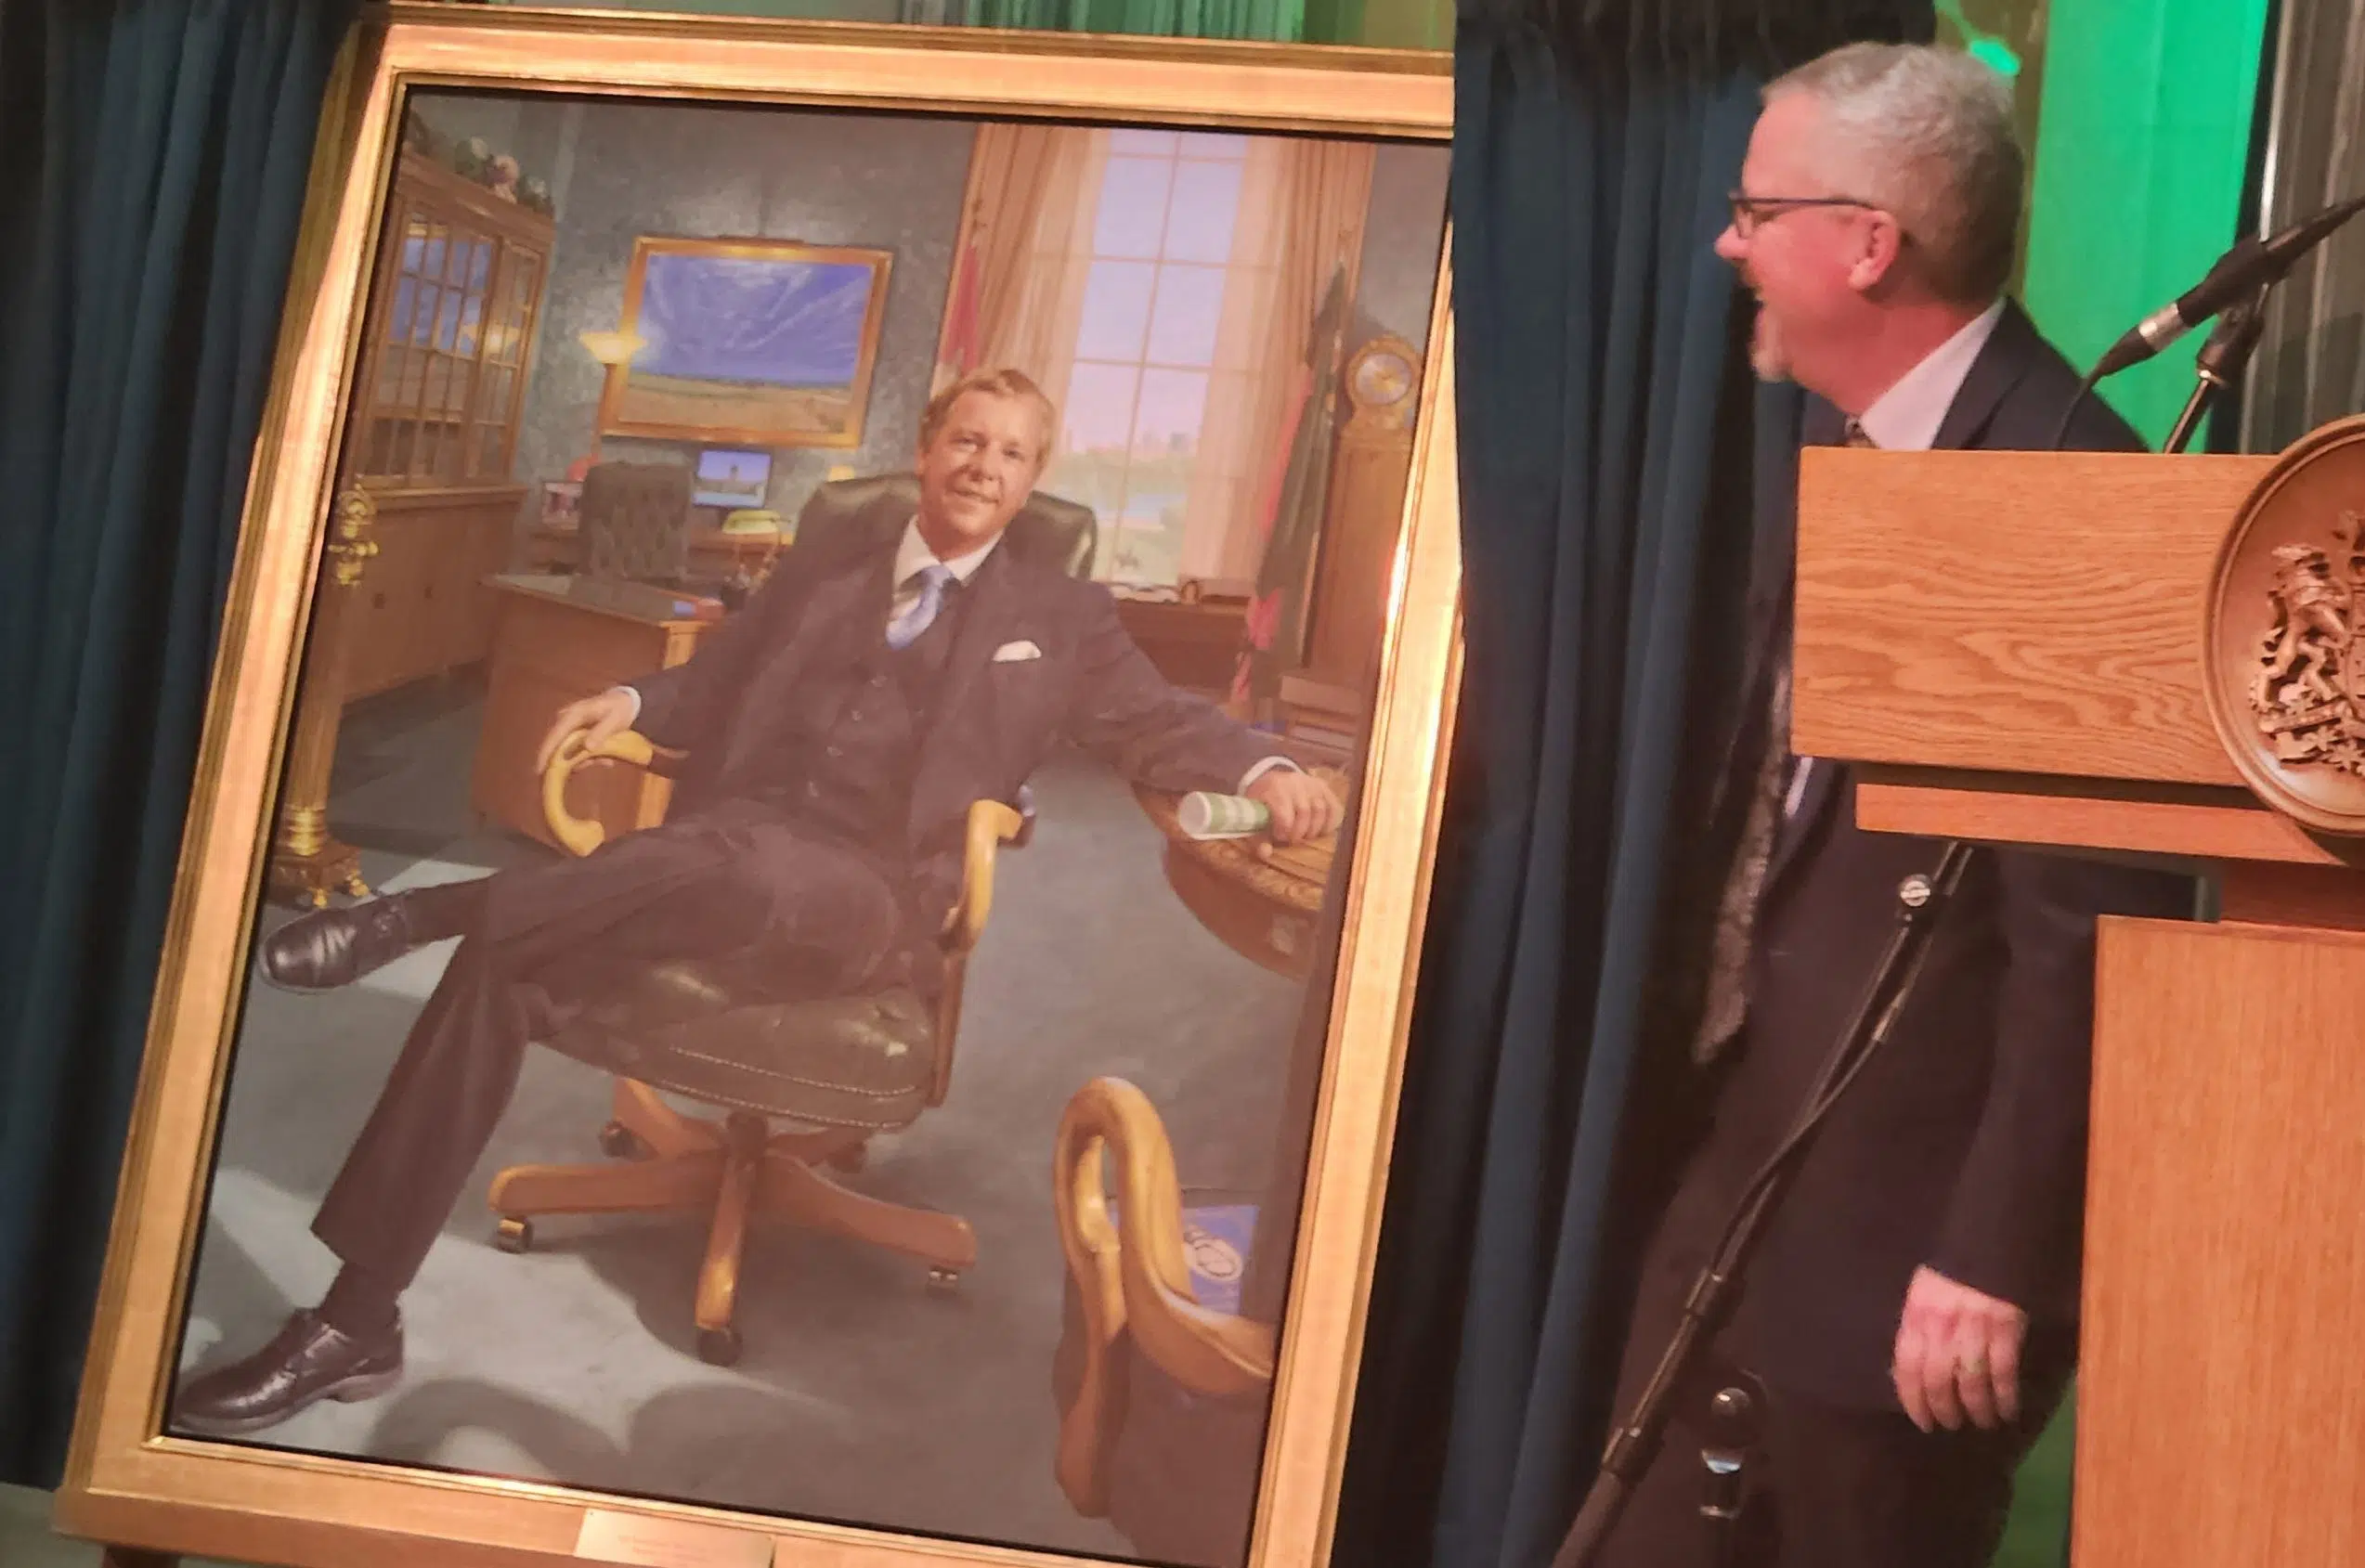 Saskatchewan unveils official portrait of former premier Brad Wall at Legislature